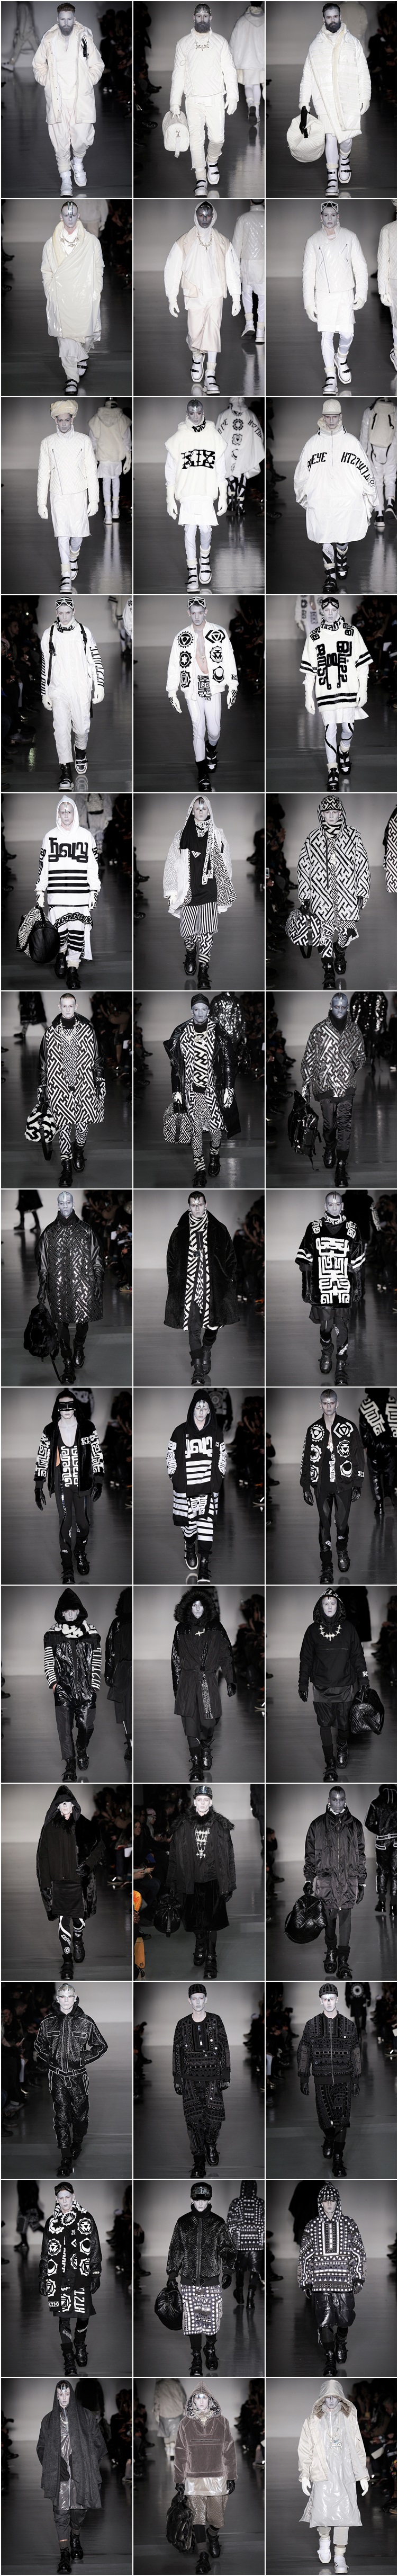 ktz-fall-winter-2014-fashion4addicts.com